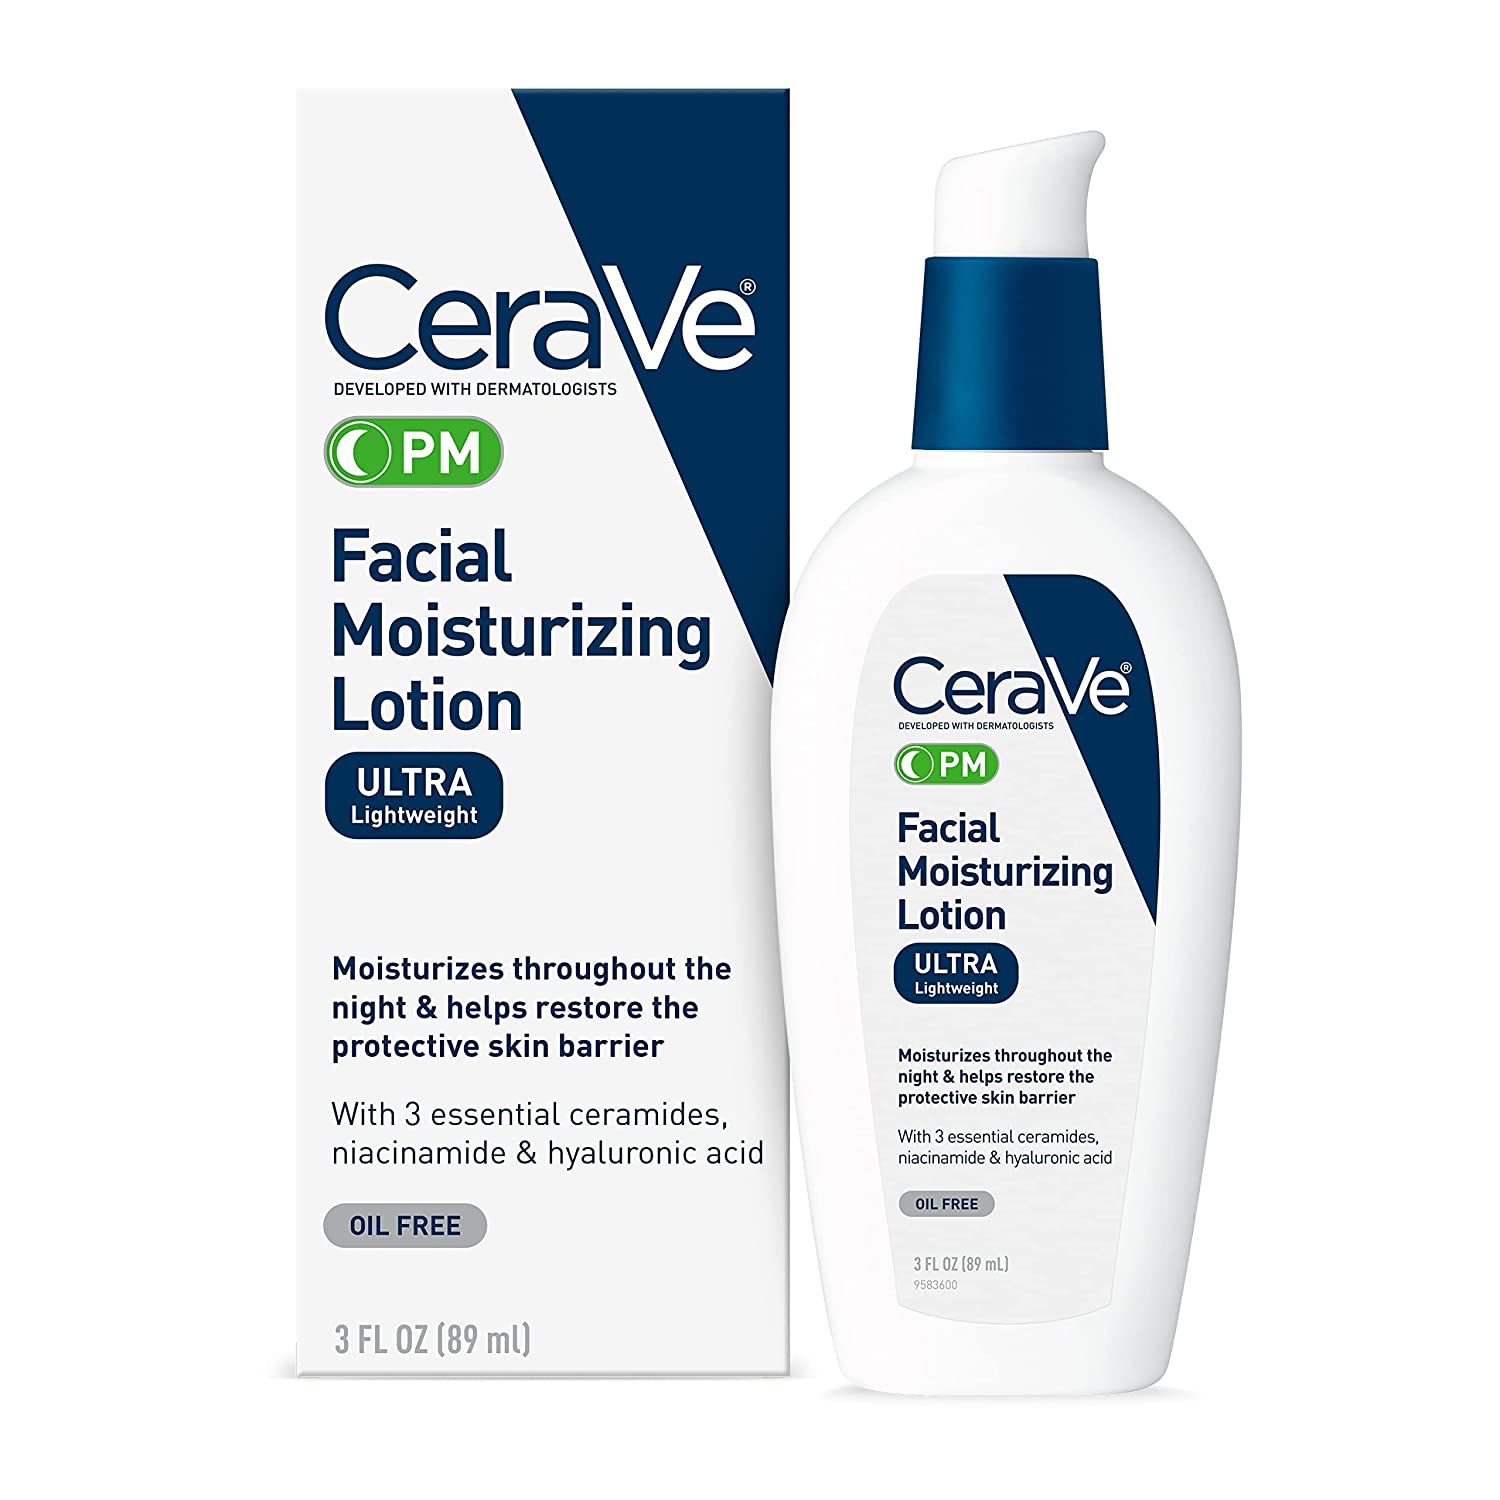 CeraVe PM Facial Moisturizing Lotion 3oz $8.30 AC YMMV